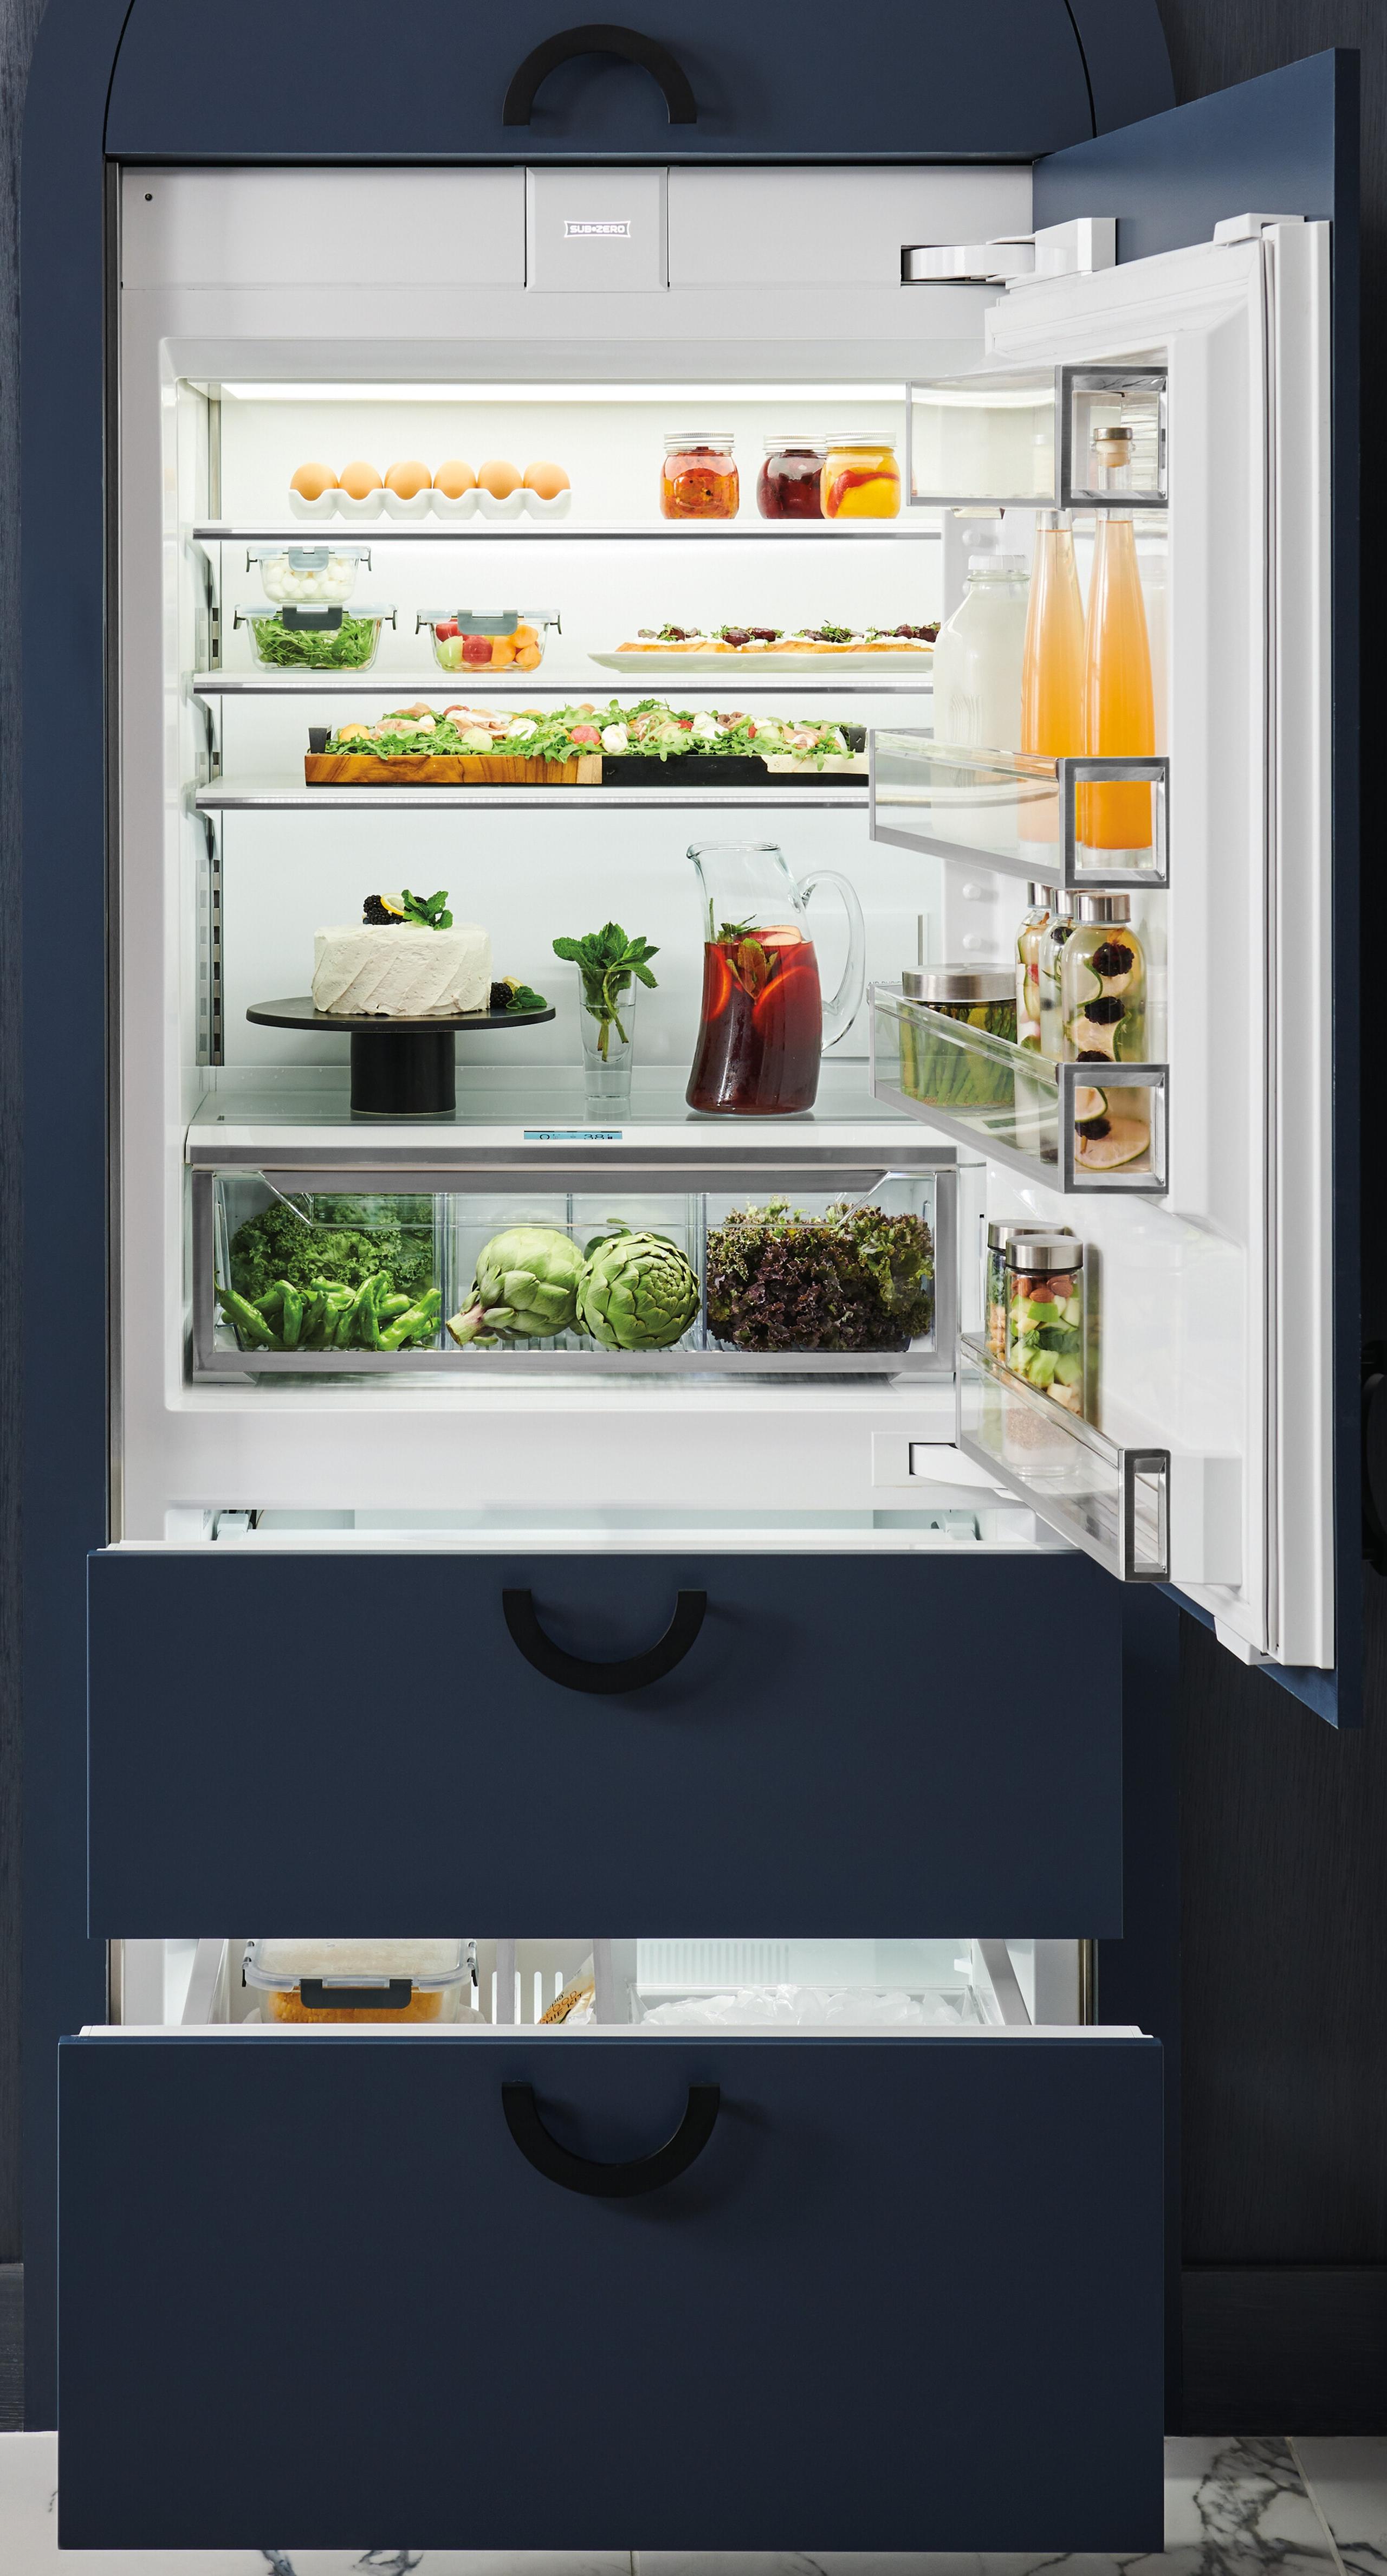 Refrigerator Freezer Drawers by Sub Zero, KitchenAid, Perlick & More